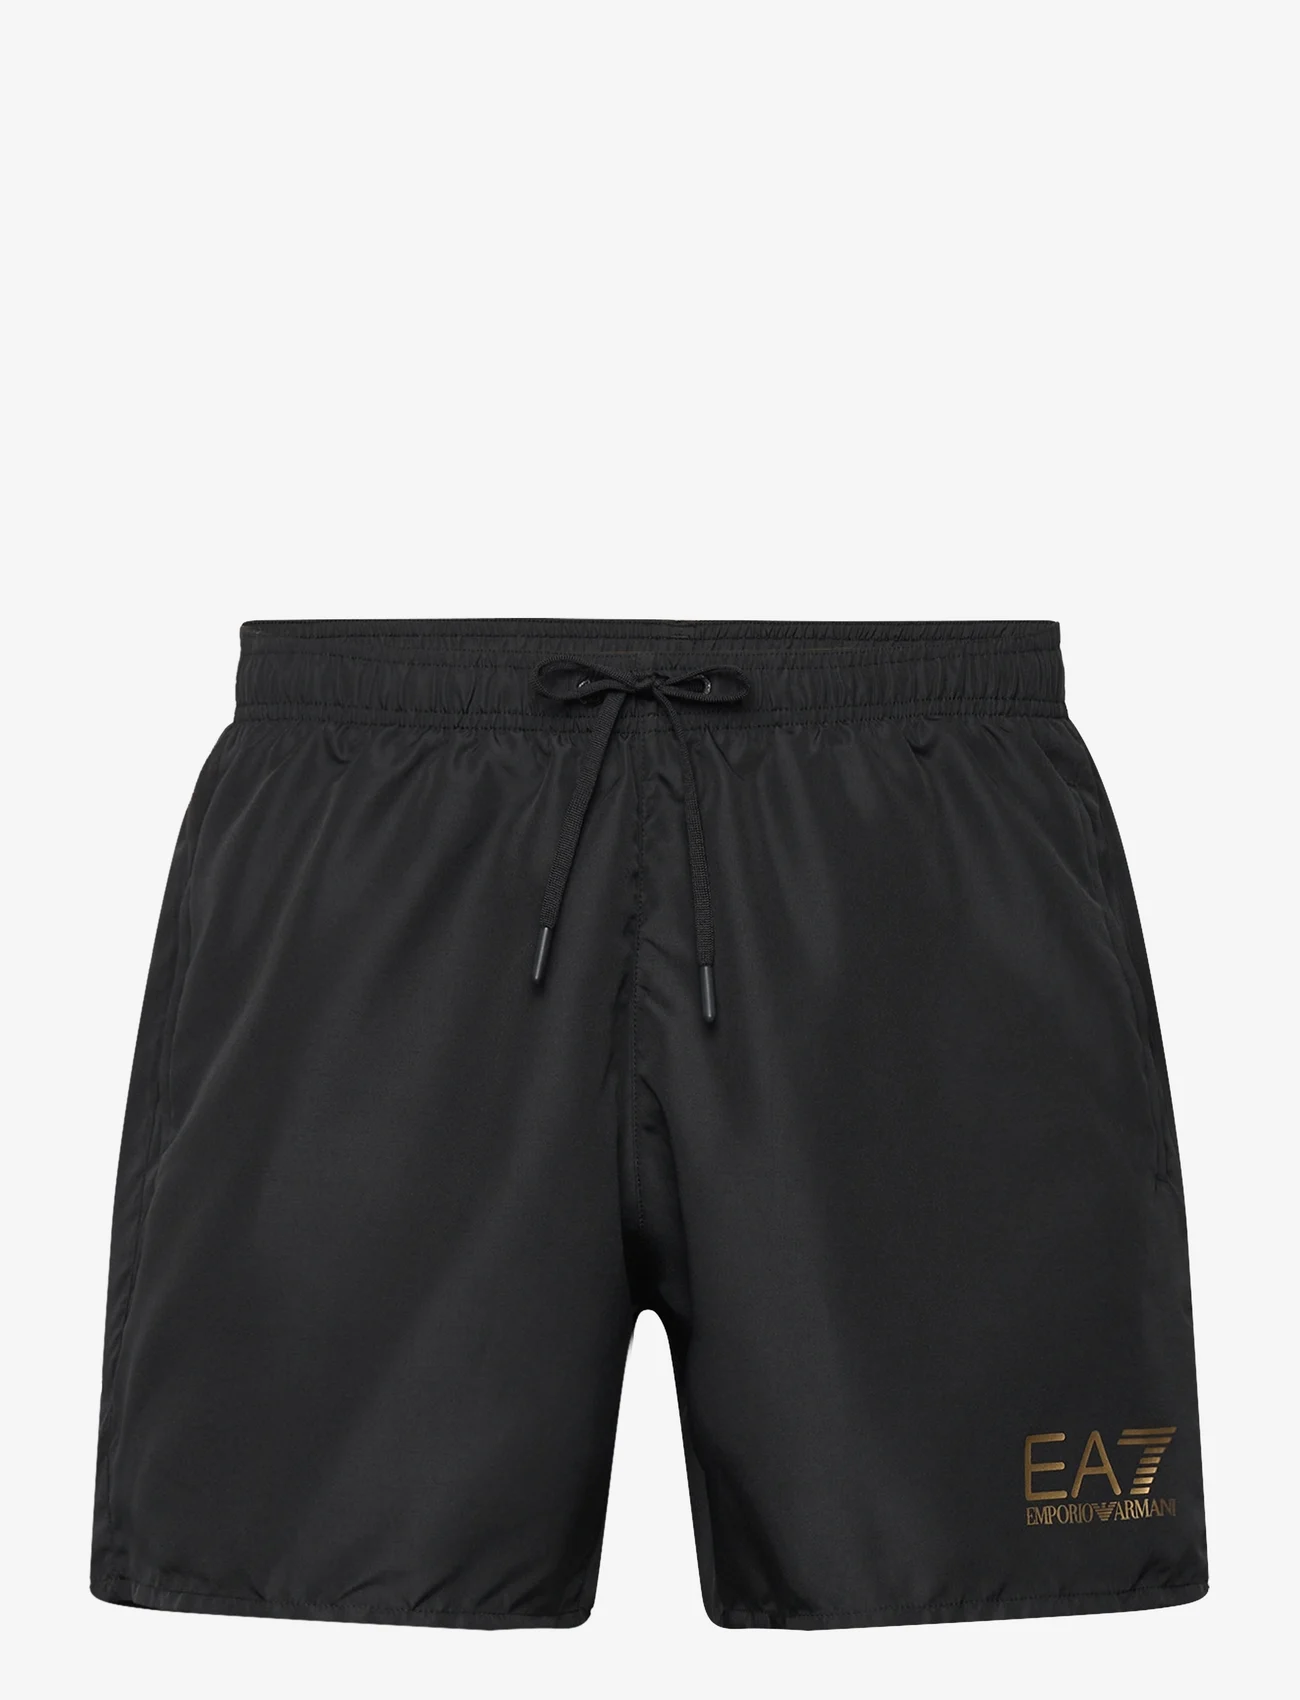 EA7 - MENS WOVEN BOXER - swim shorts - 00120-nero - 0